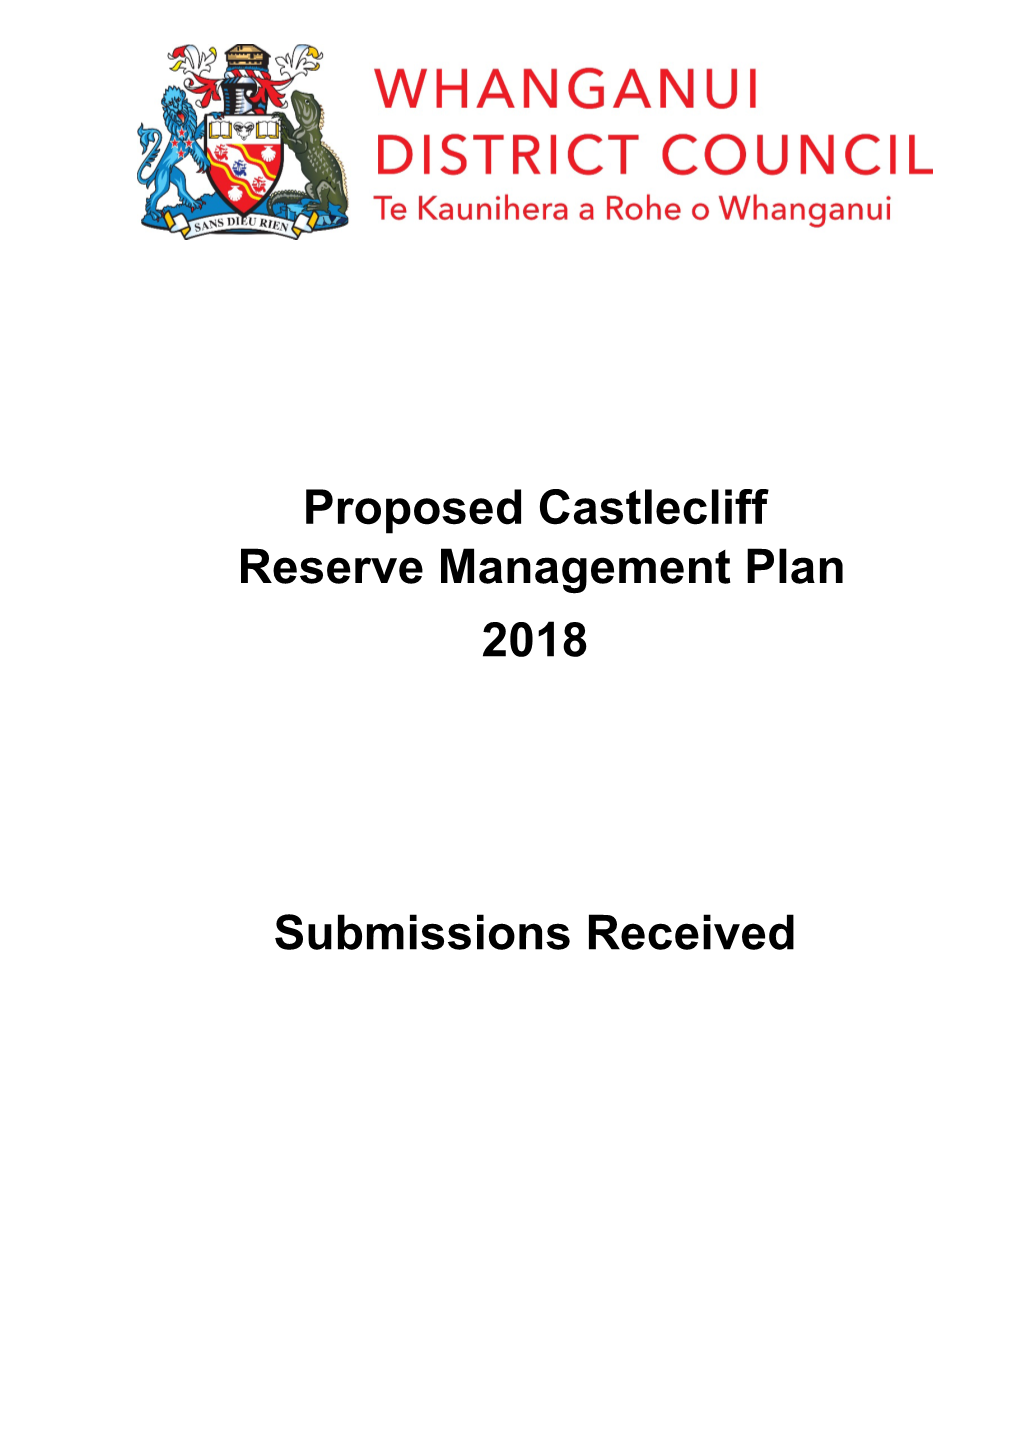 Proposed Castlecliff Reserve Management Plan 2018